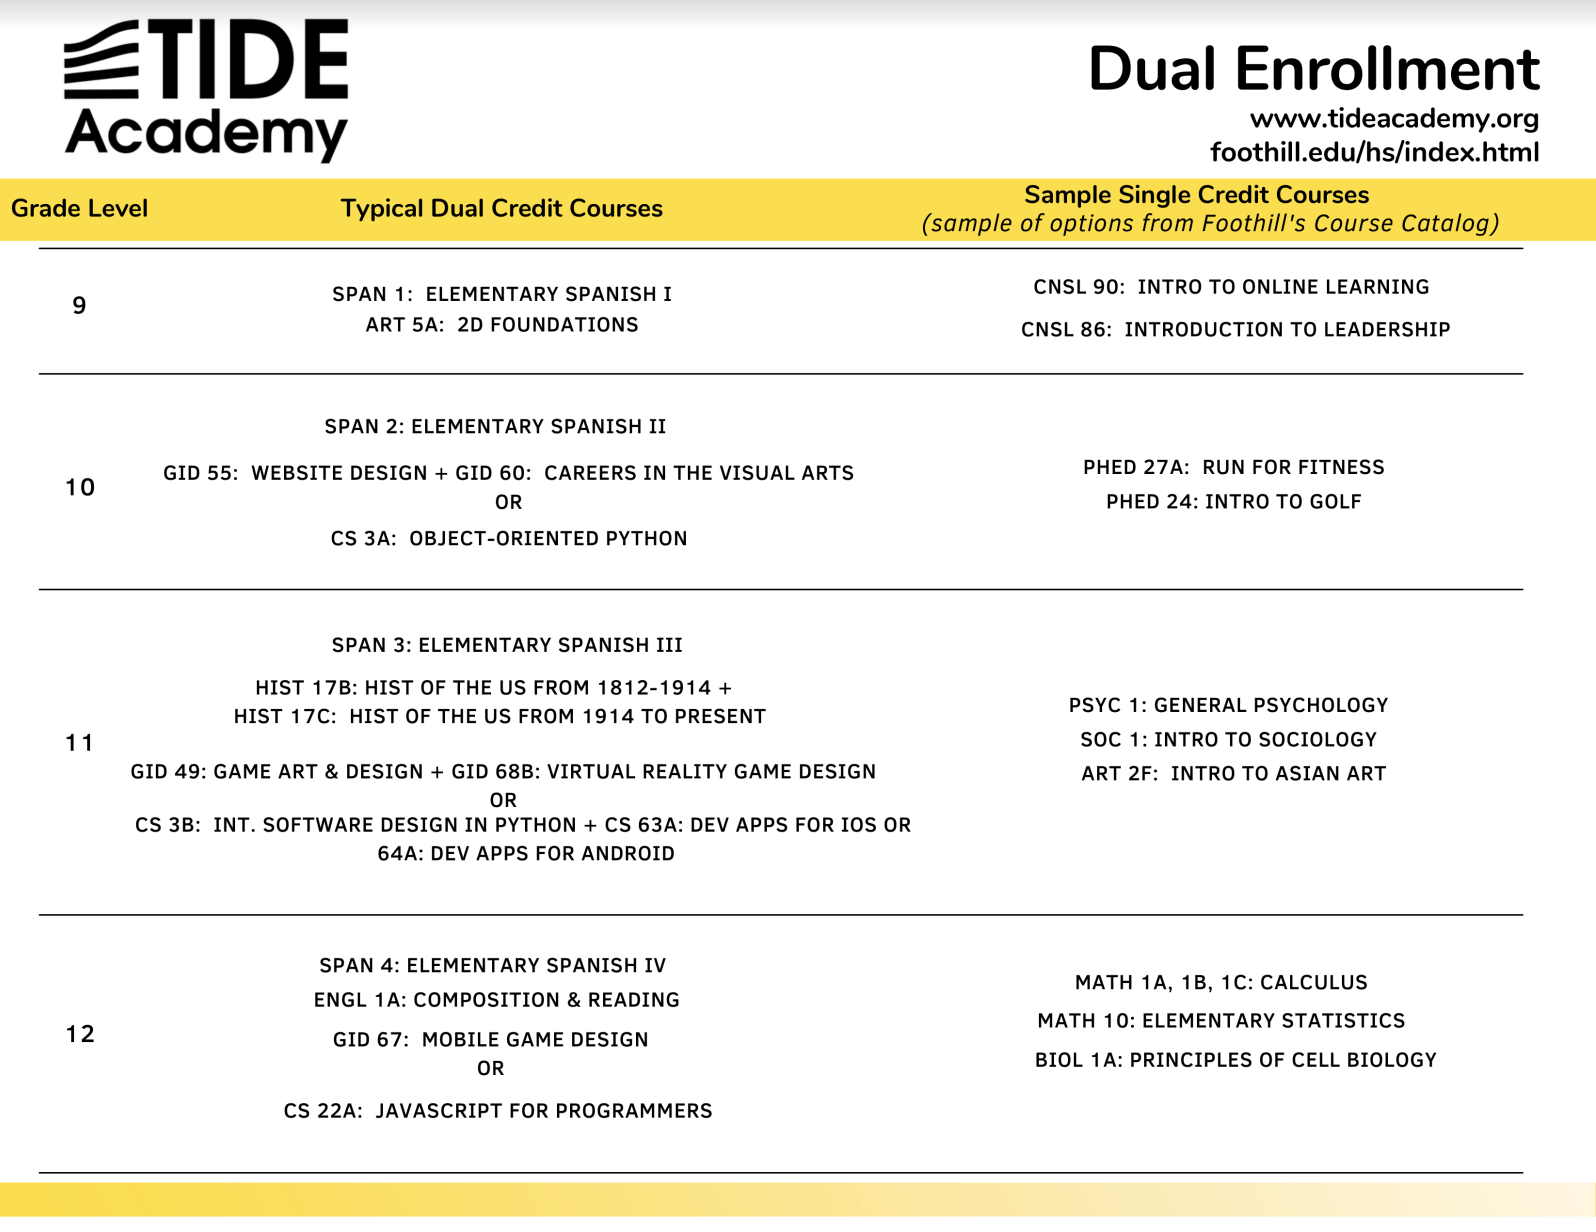 Dual Enrollment Info